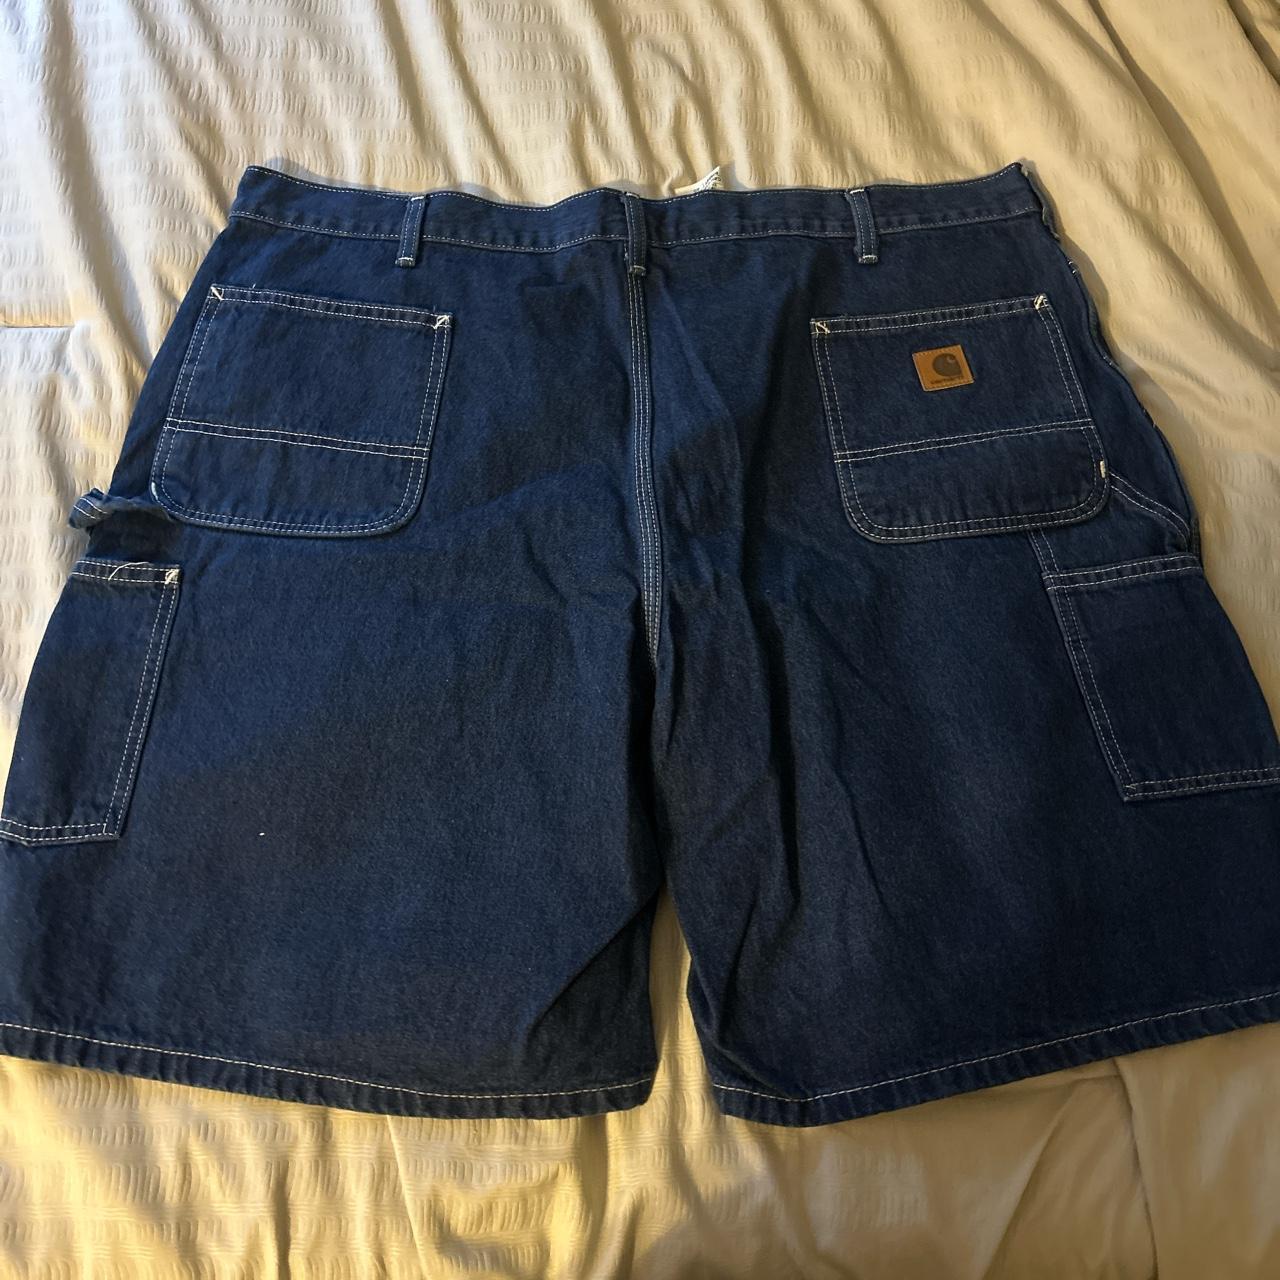 Carhartt Men's Pants, Shorts, & Jeans